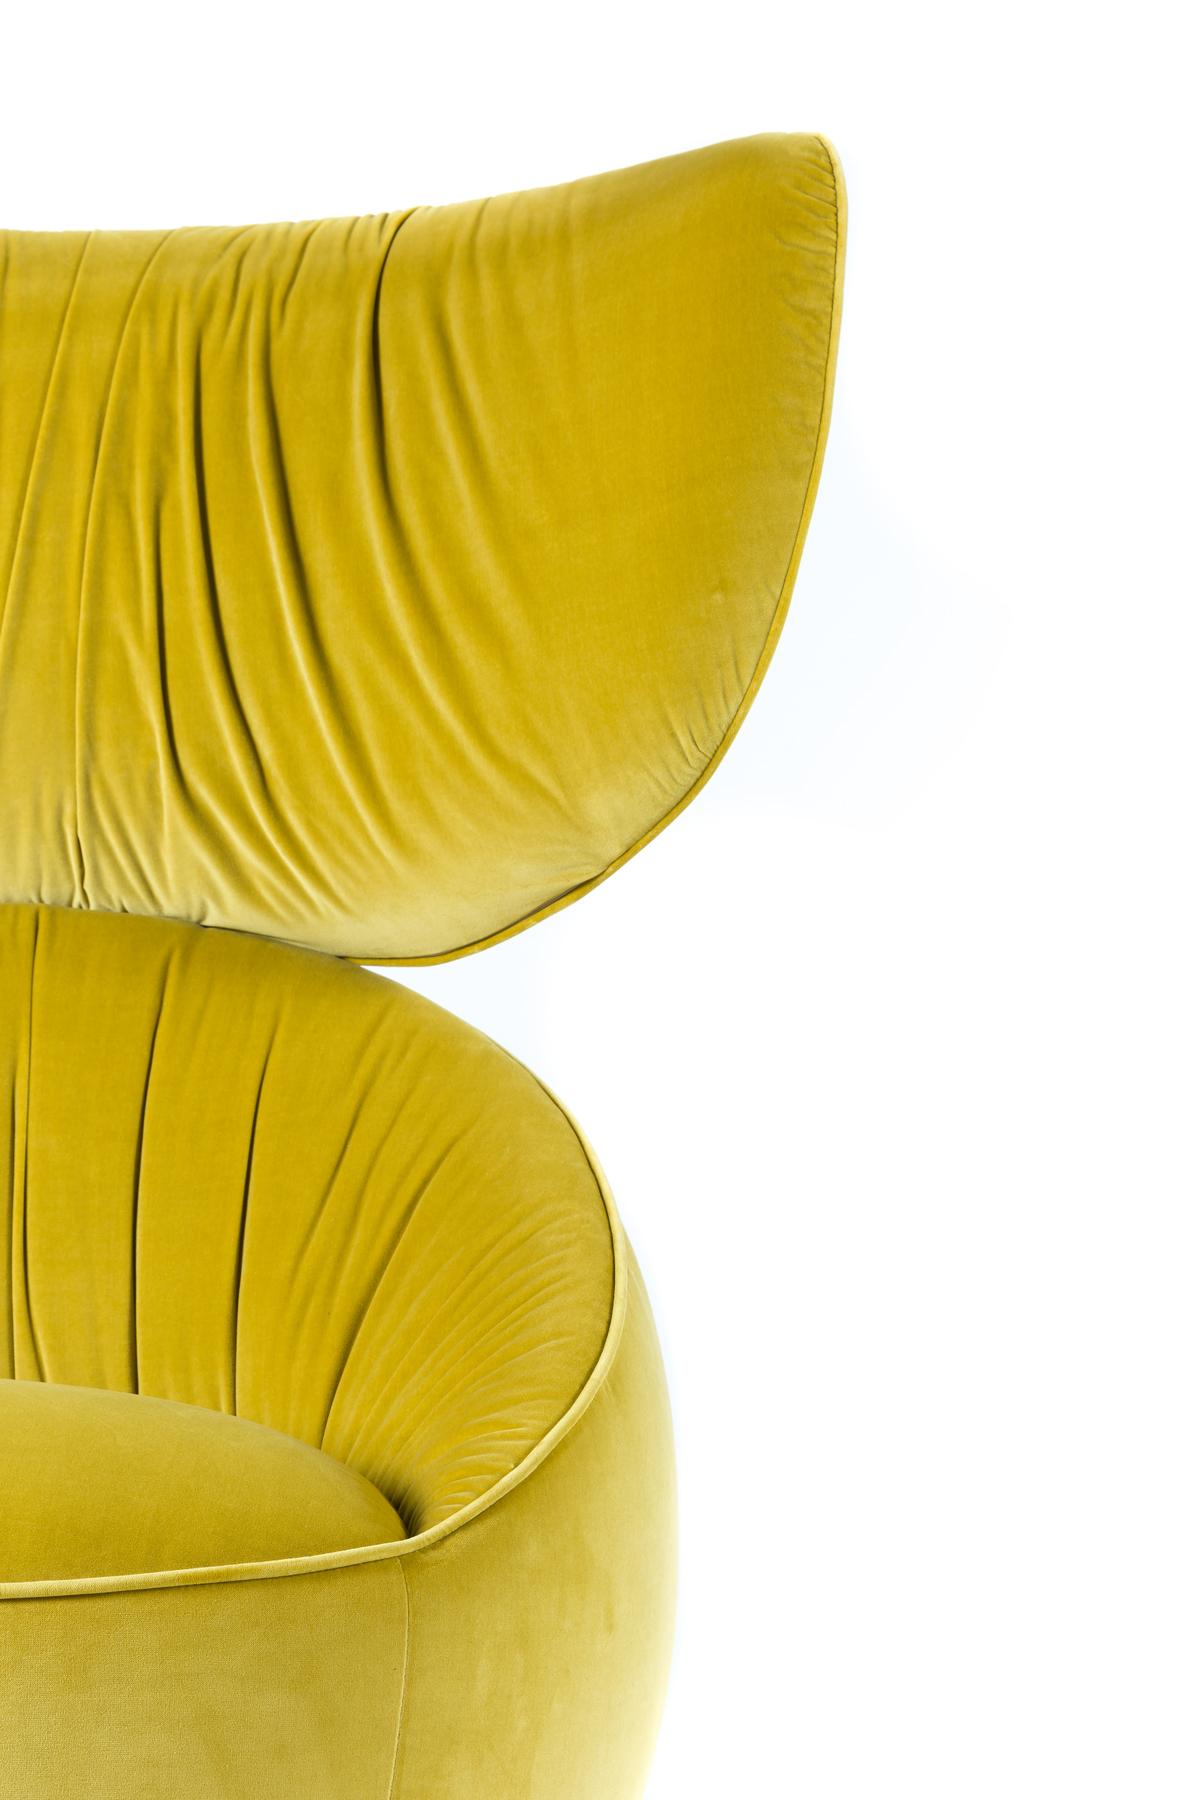 Moooi Hana Wingback Swivel Chair in Harald 3, 443 Yellow Upholstery For Sale 2